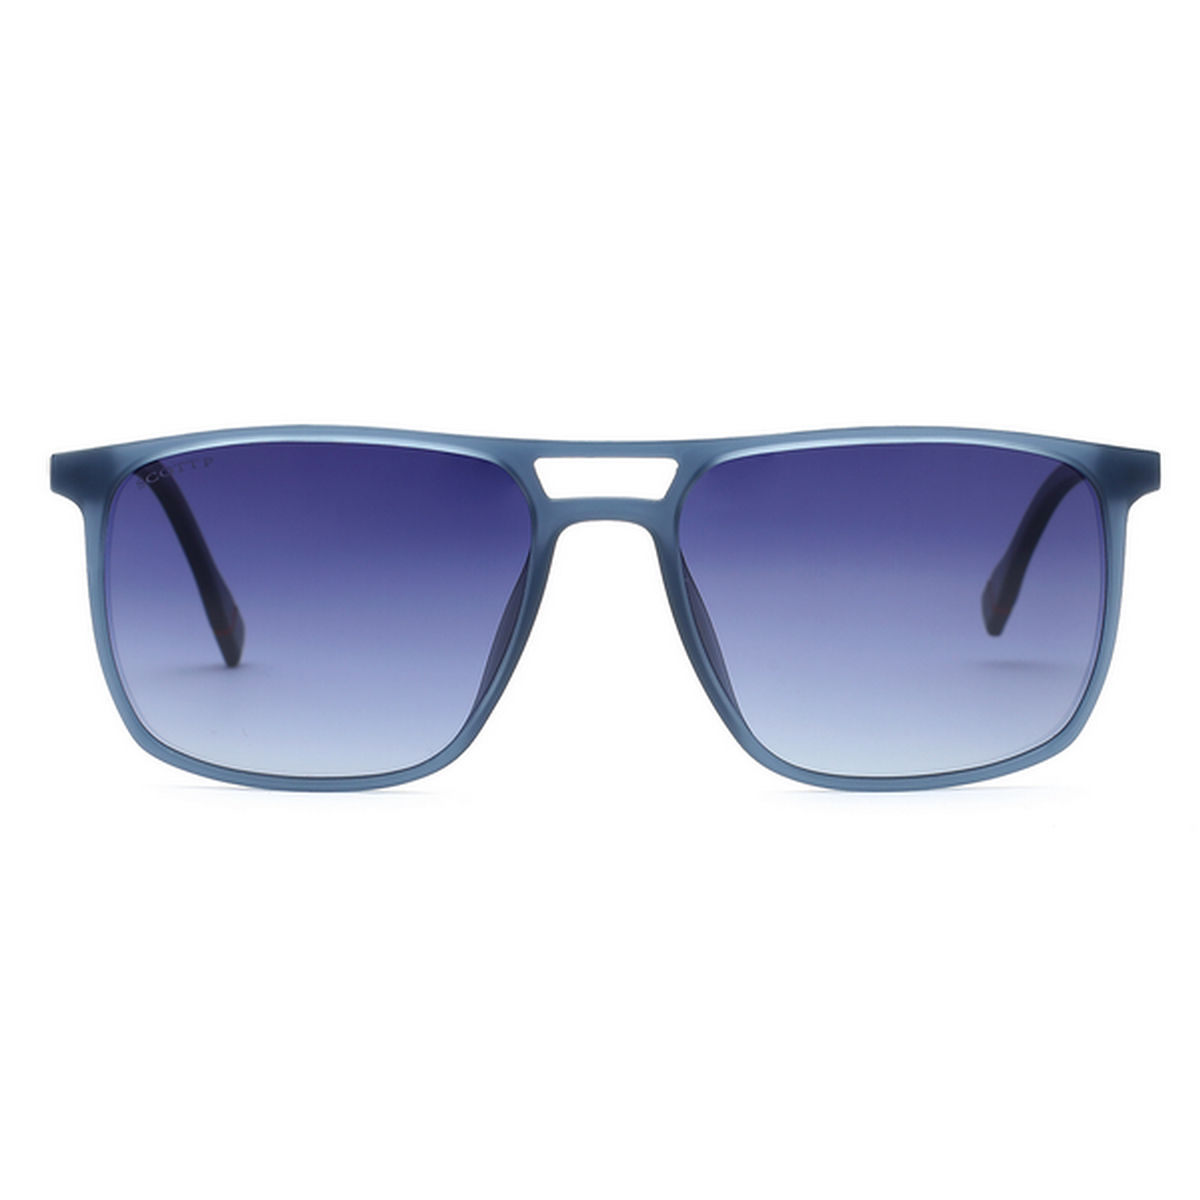 Scott Sunglasses Women Sunglasses : Buy Scott Sunglasses Brown Lens Aviator  UV Protected Sunglass Full Rim Gold Frame With UV Protection Online | Nykaa  Fashion